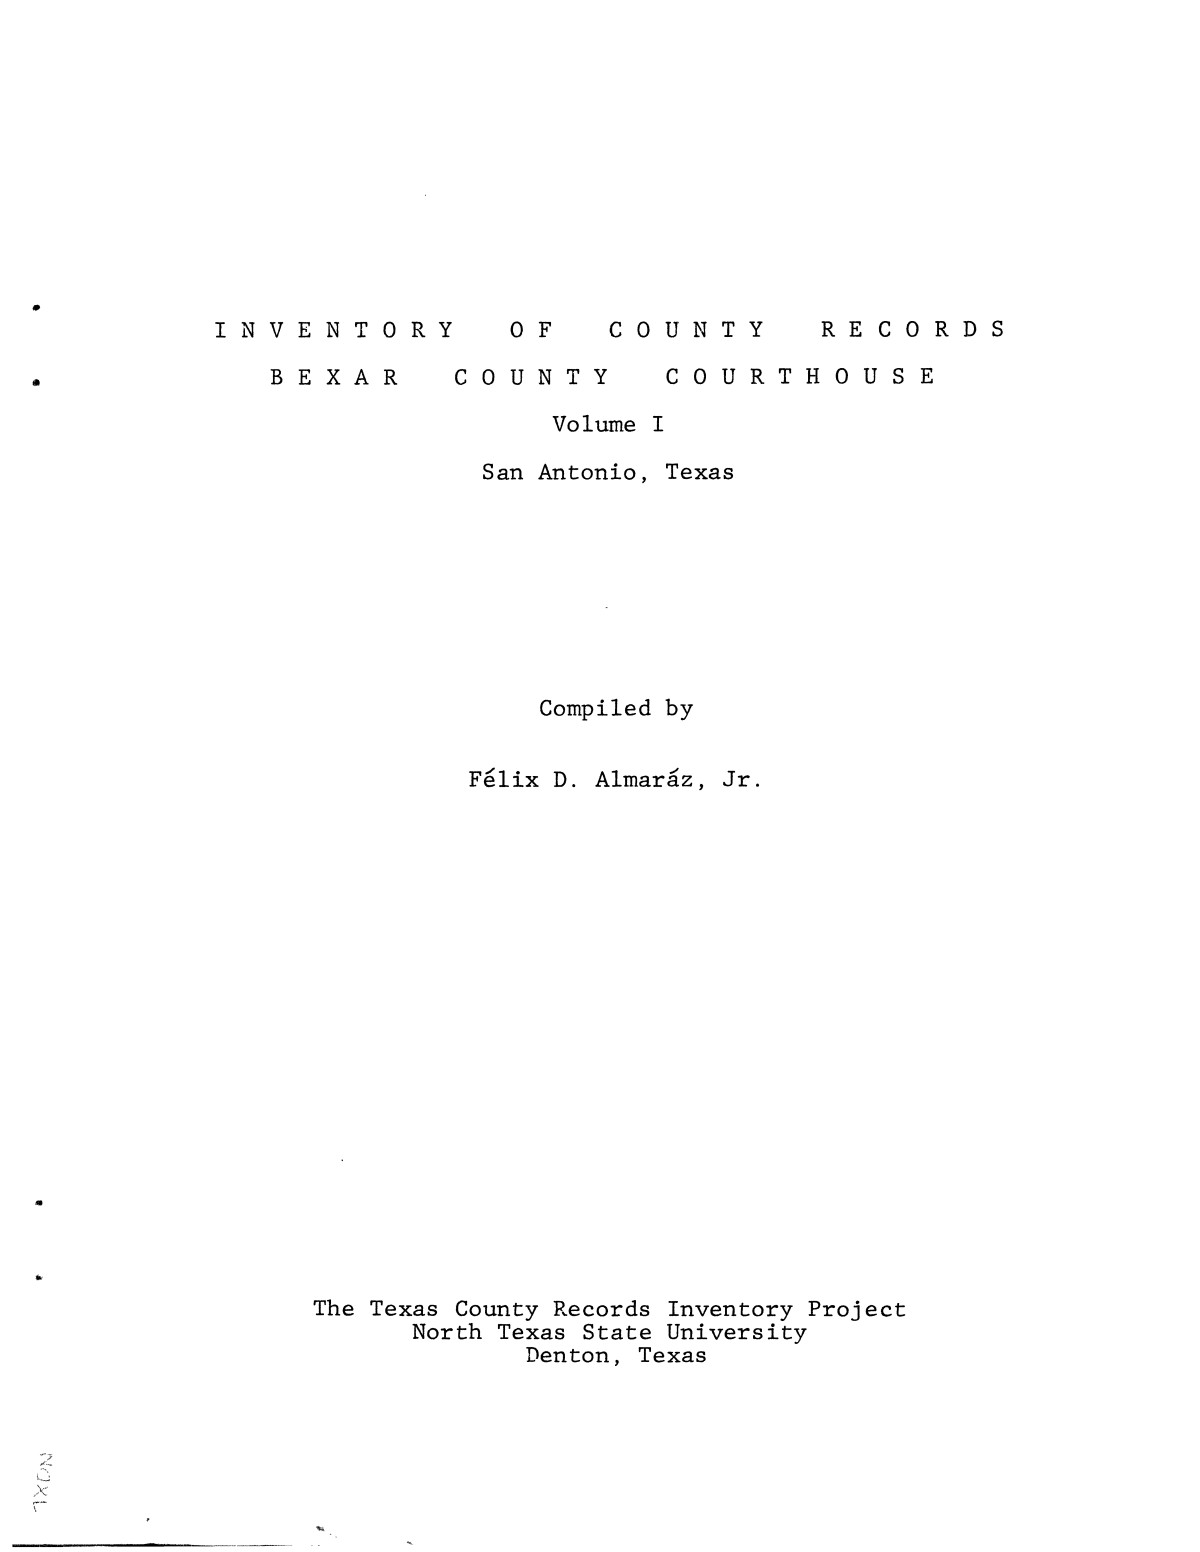 Inventory of county records, Bexar County courthouse, San Antonio, Texas, Volume 1
                                                
                                                    I
                                                